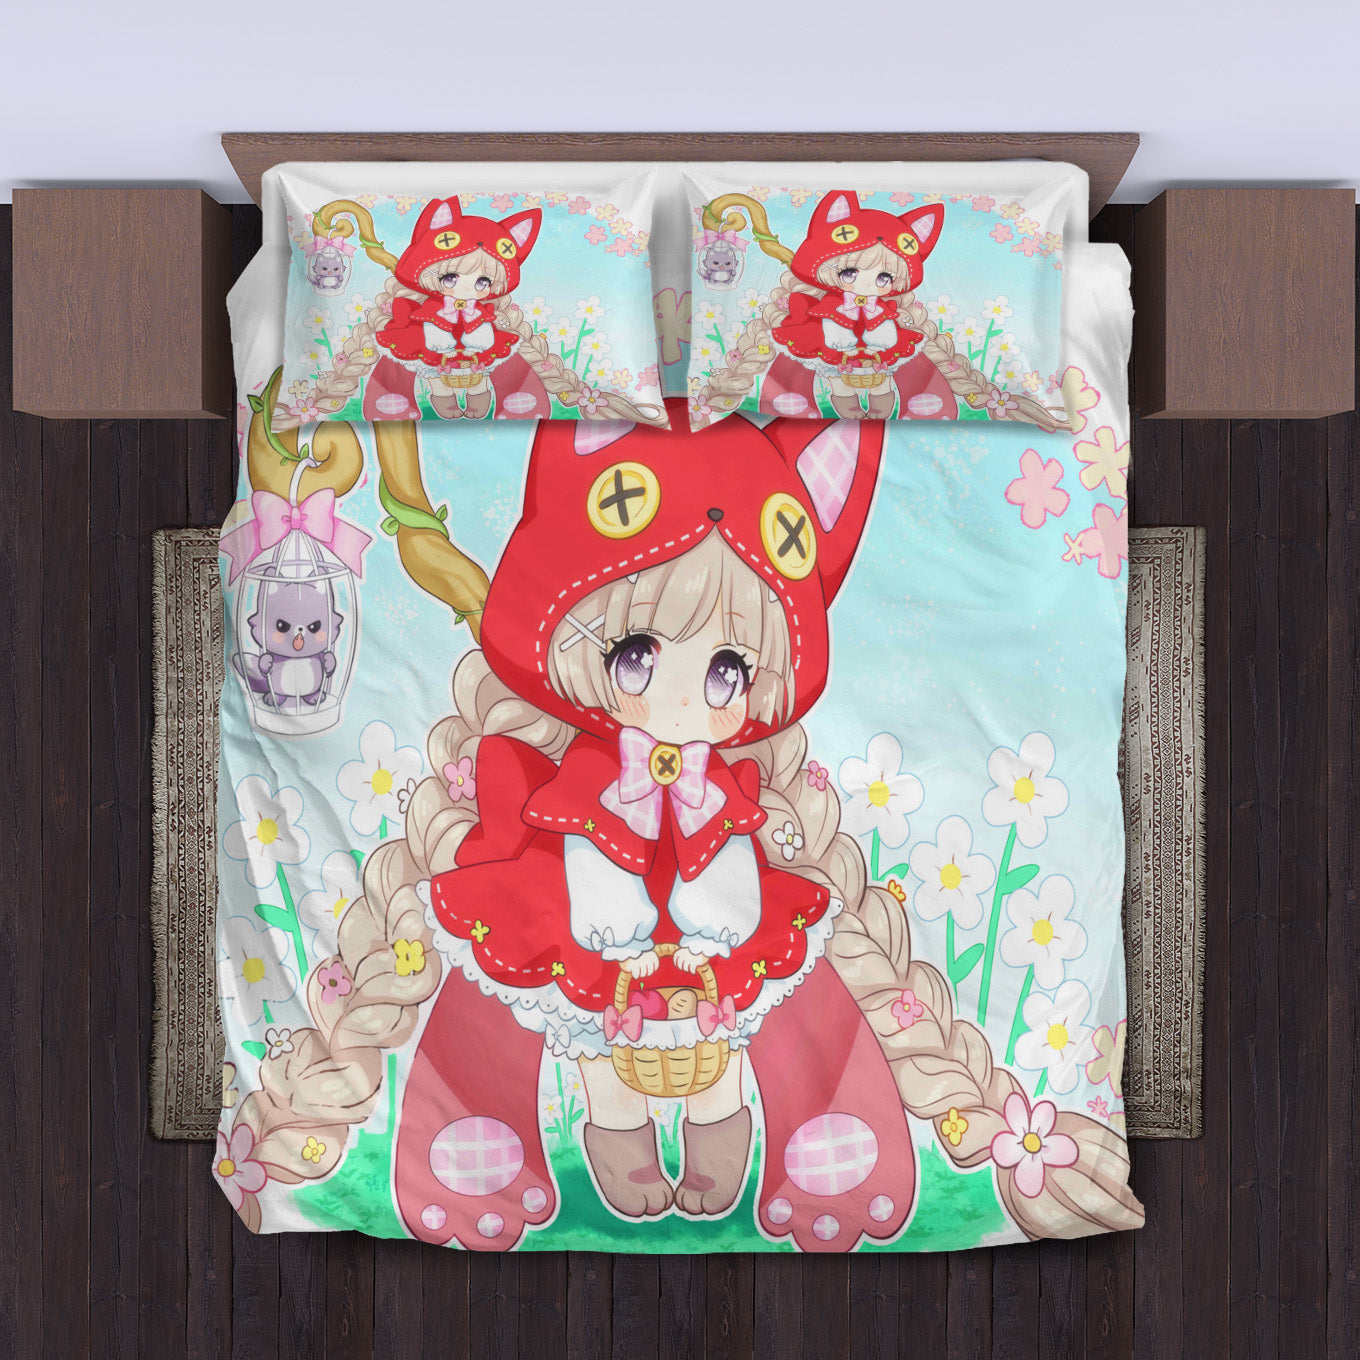 Chibi Red Riding Hood Bedding Set Duvet Cover And Pillowcase Set